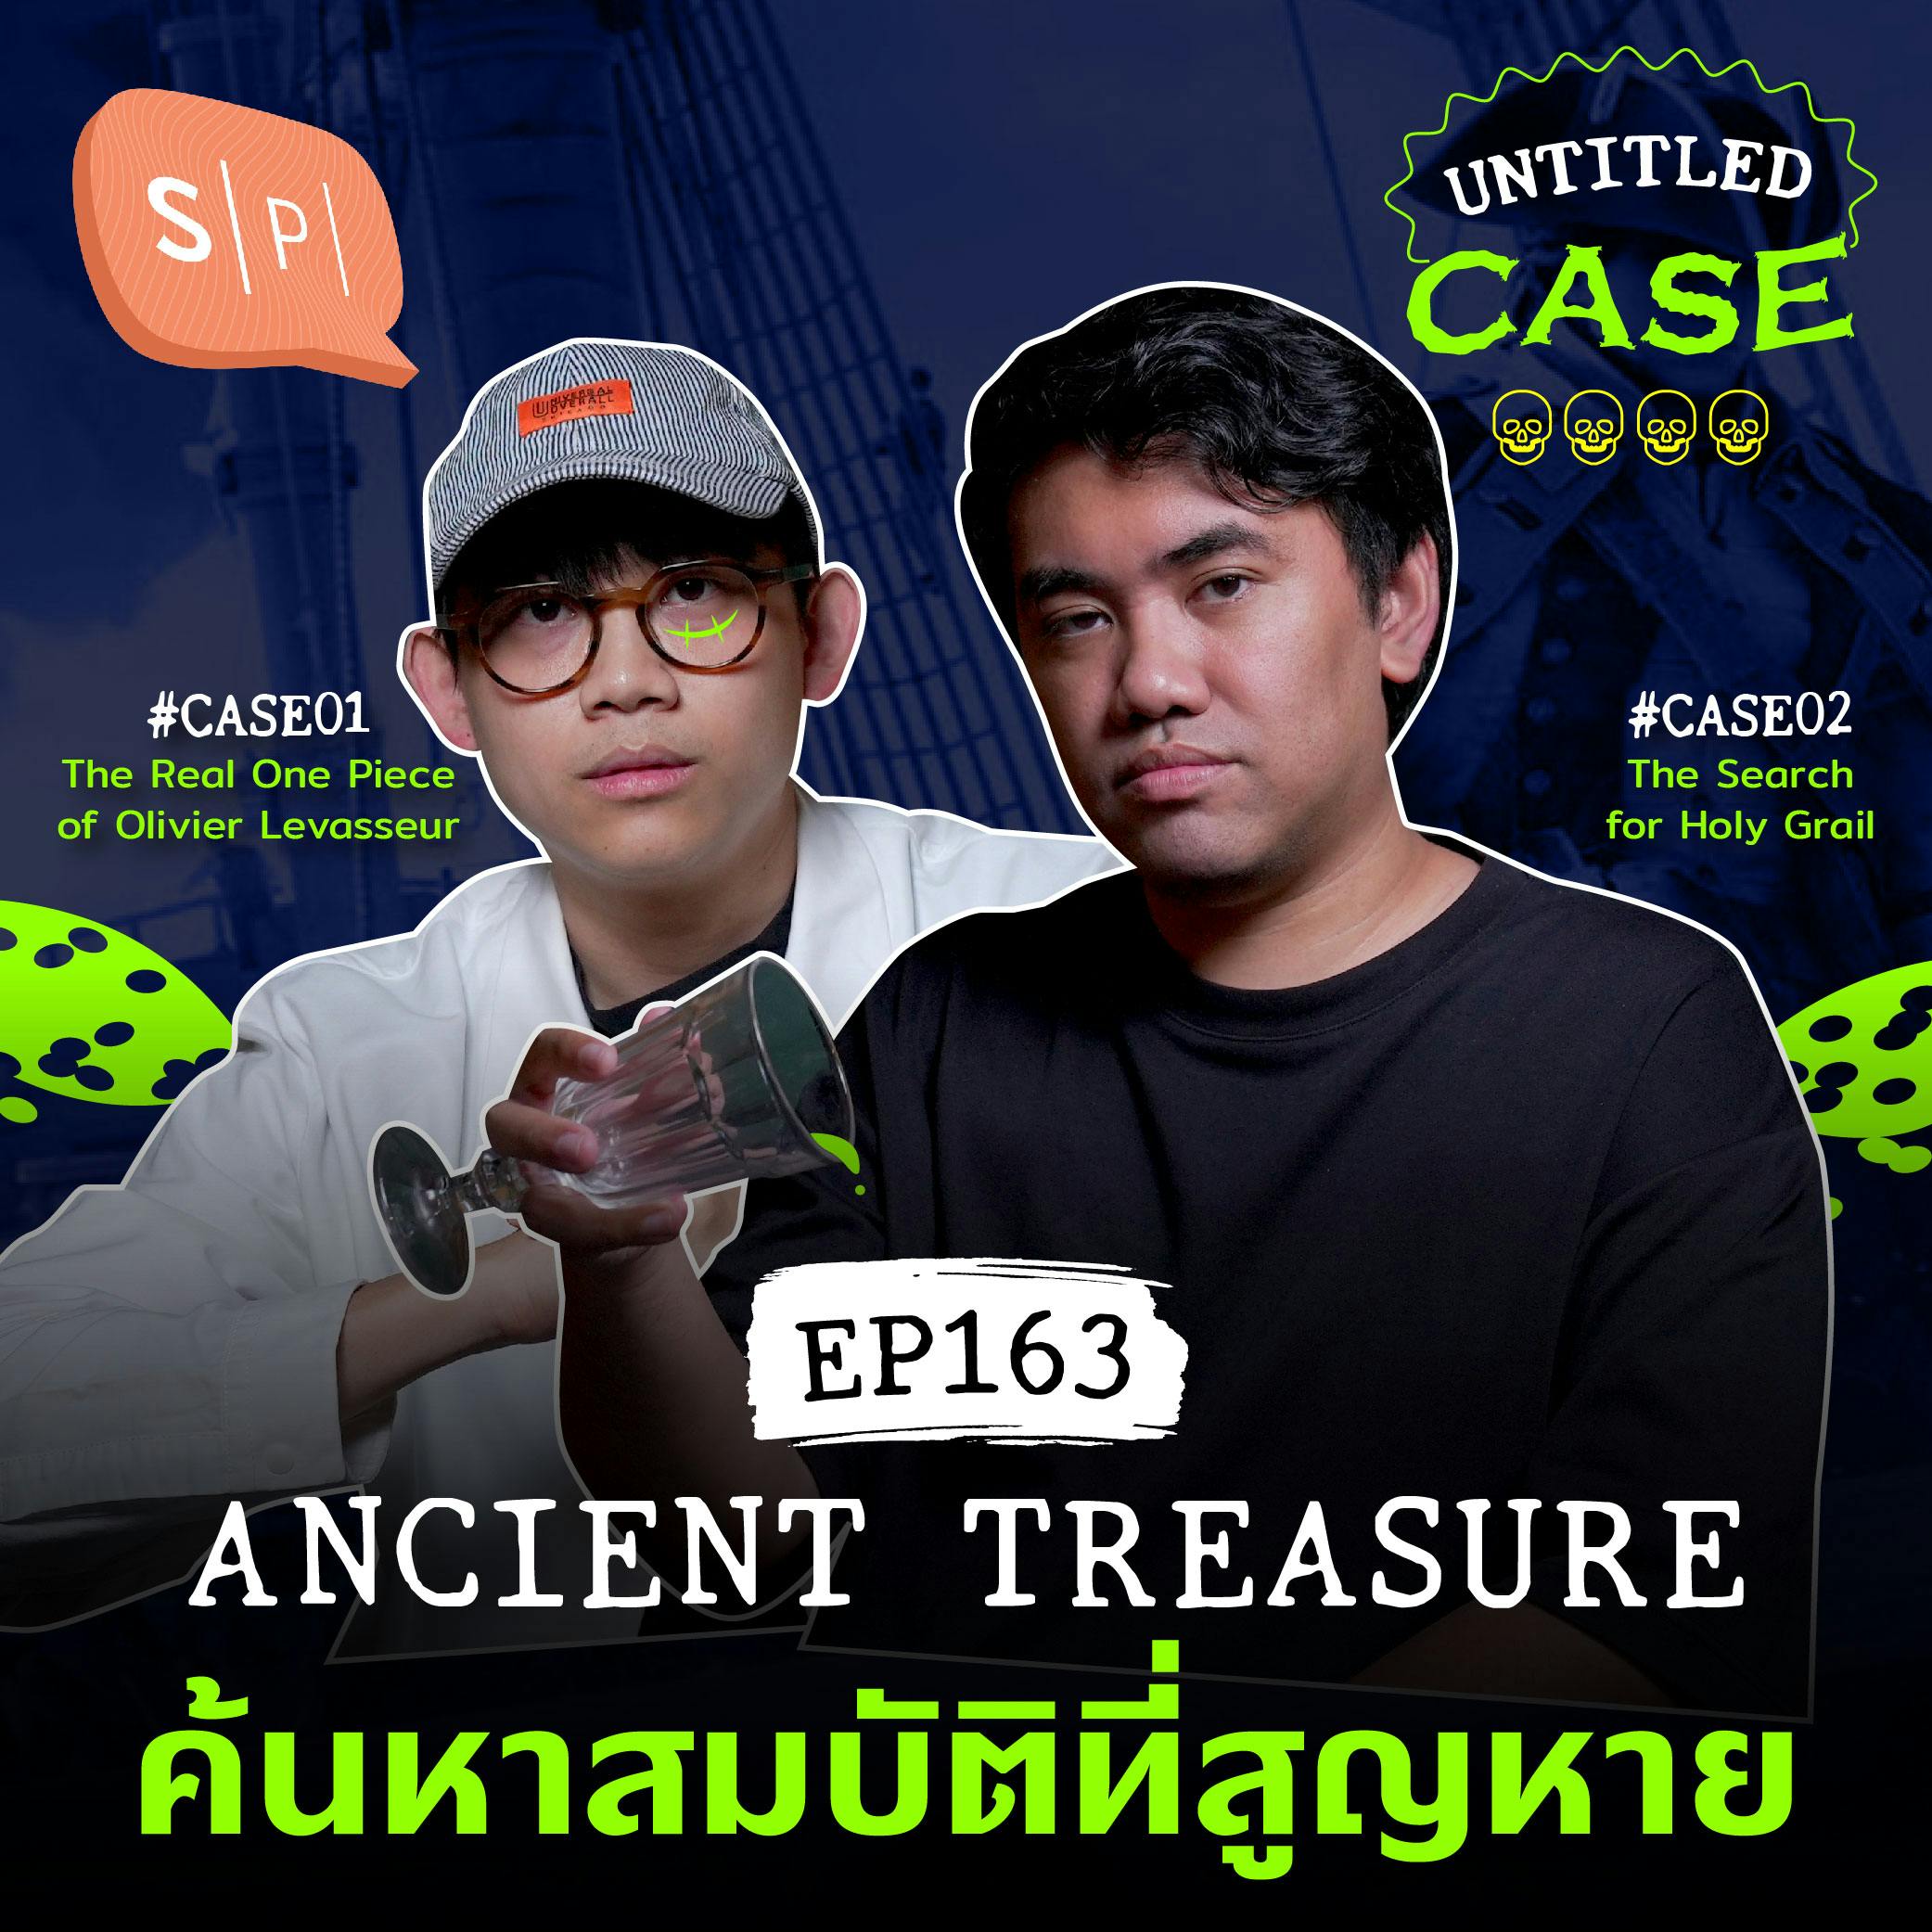 Ancient Treasure ค้นหาสมบัติที่สูญหาย | Untitled Case EP163